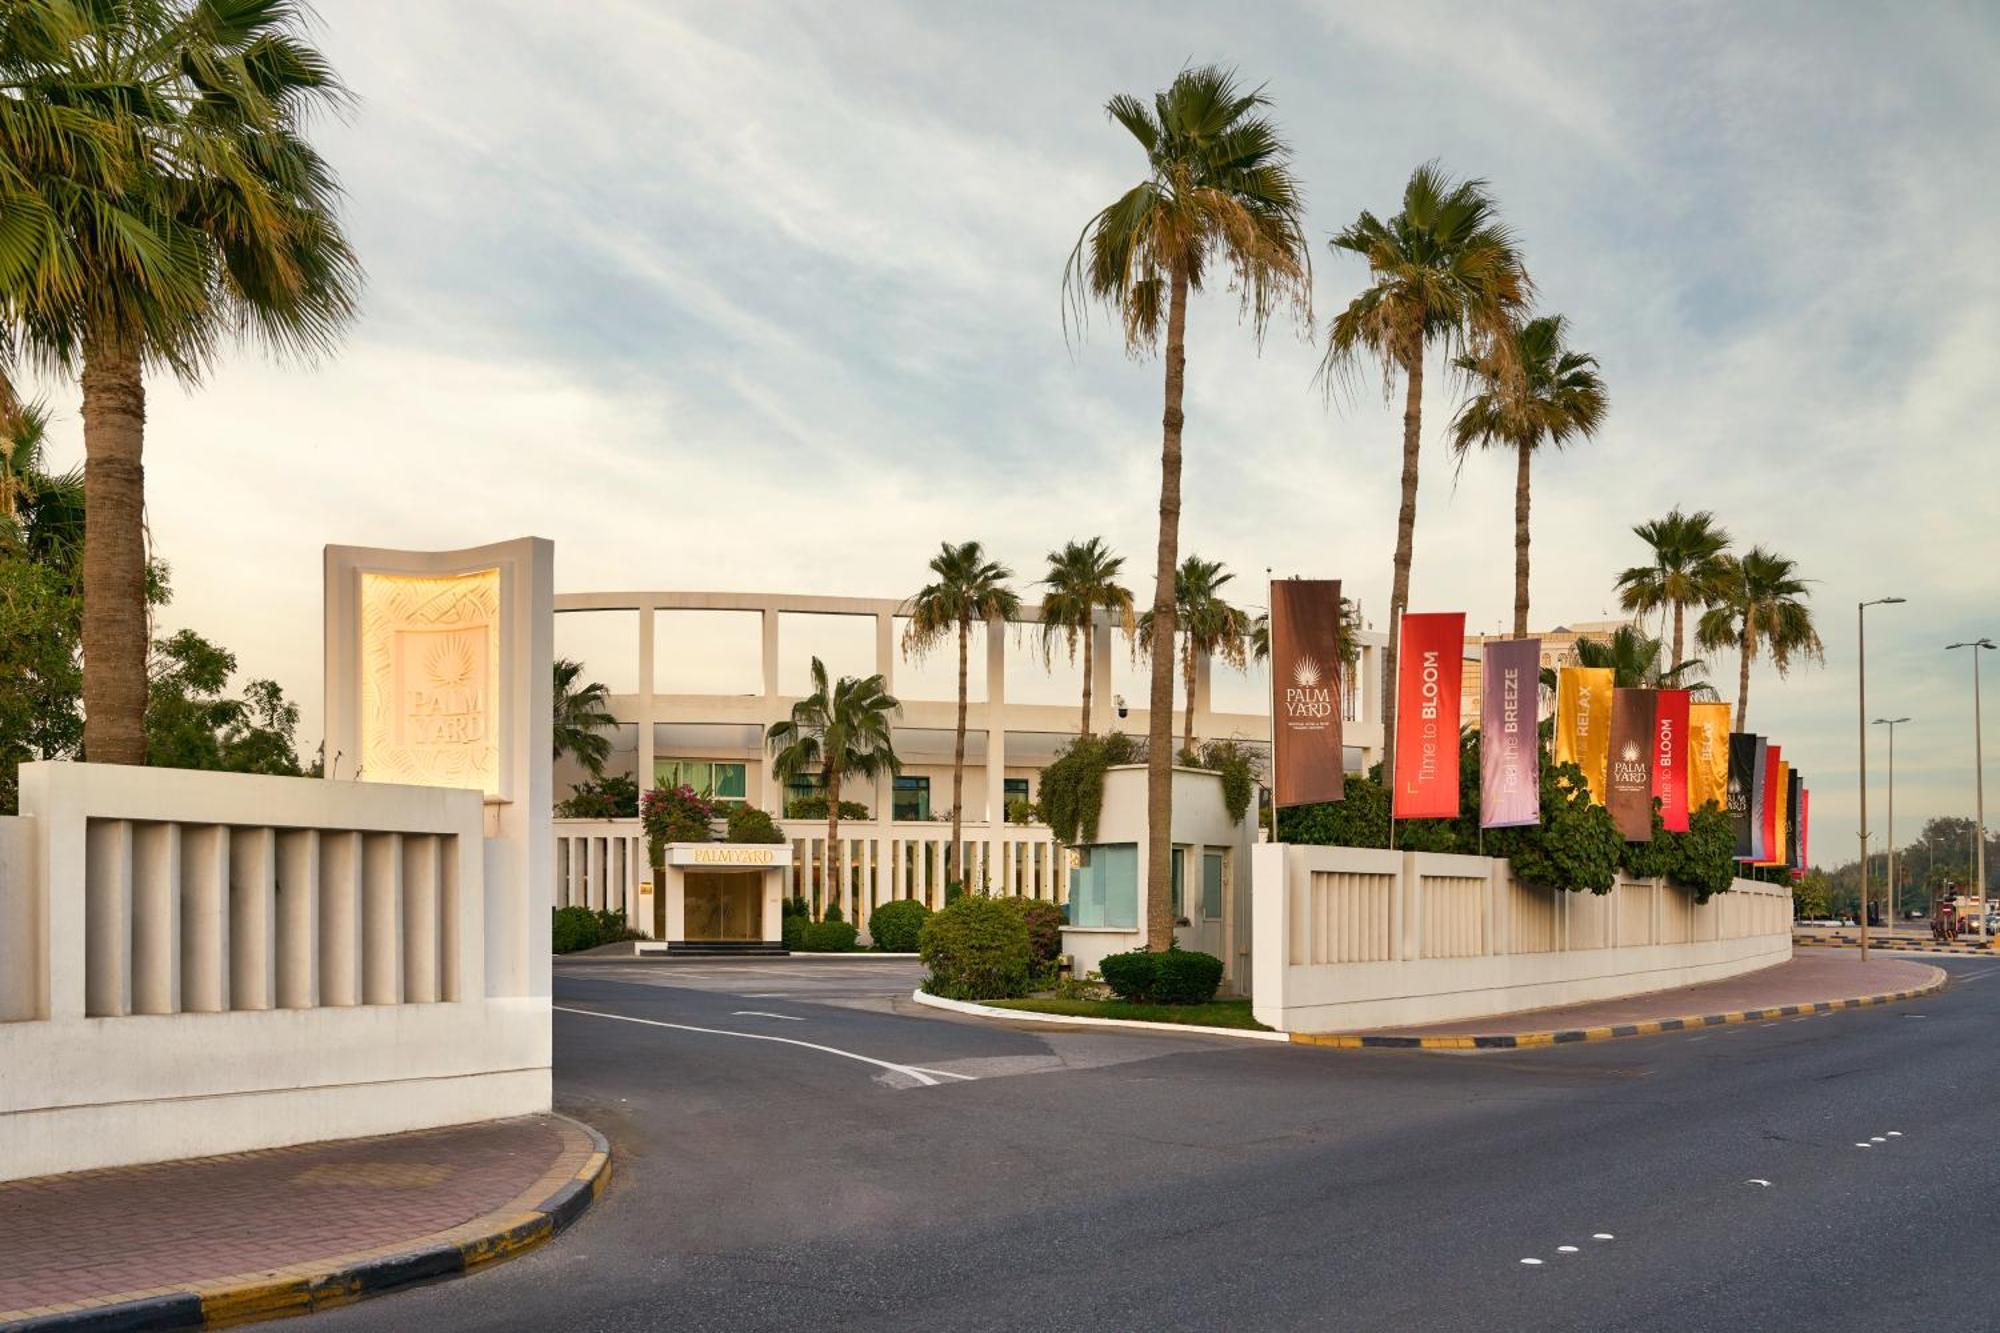 Palmyard Hotel Manama Exterior foto